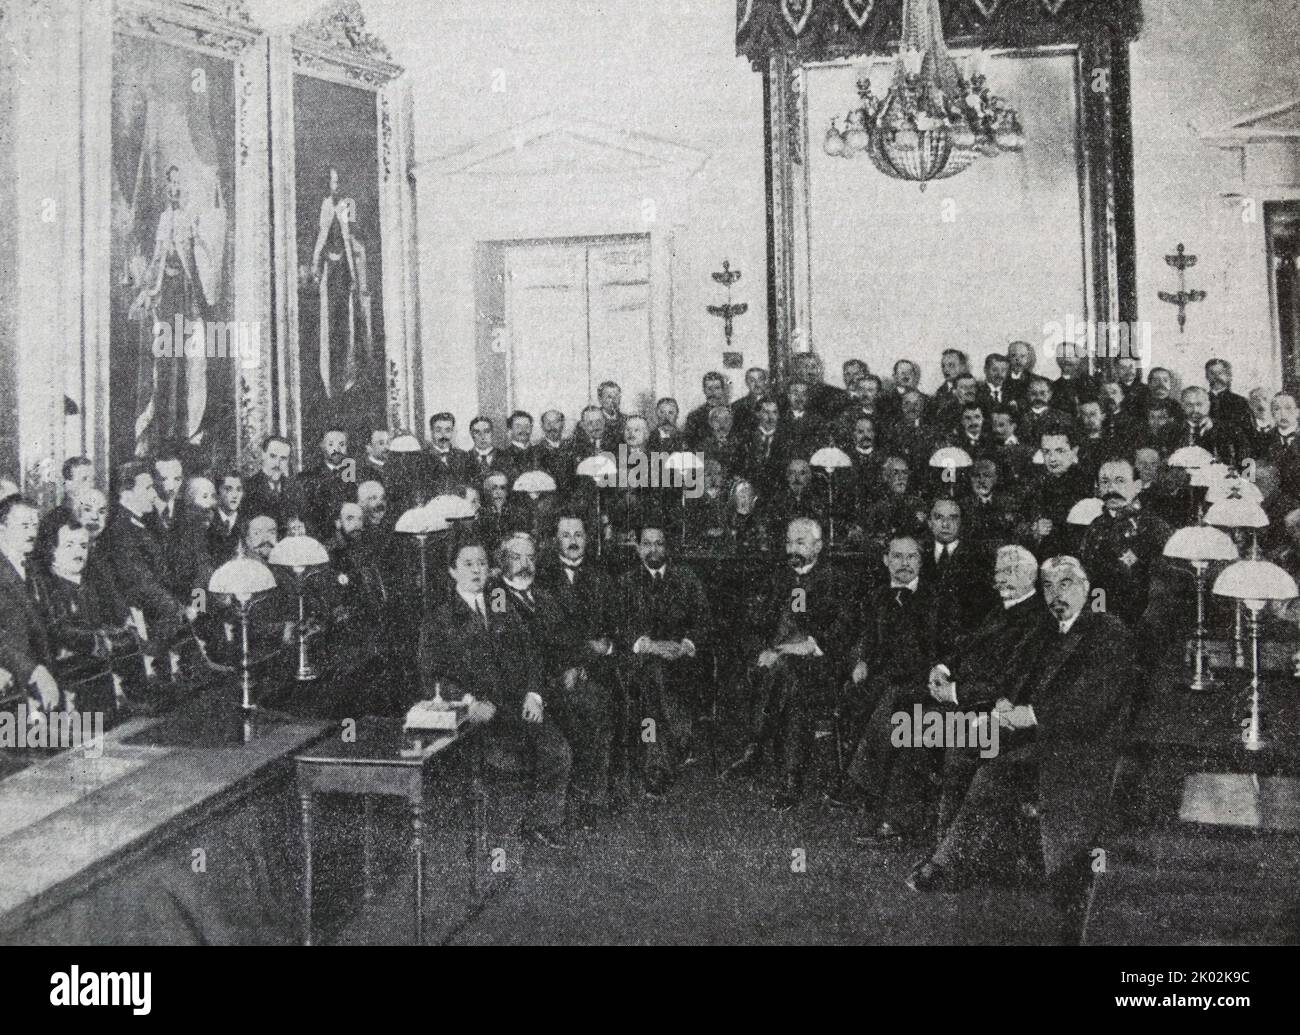 Die provisorische Regierung Russlands 1917. (Von links nach rechts sitzend): A.I. Konovalov, A.I. Gutschkov, N.V. Nekrasov, A.I. Shingarev, G.E. Lemberg, I.V. Godnev, M.I. Tereschtschenko, P.N. Miljukow, A.A. Manuylov. Worth, A.F. Kerenski Stockfoto